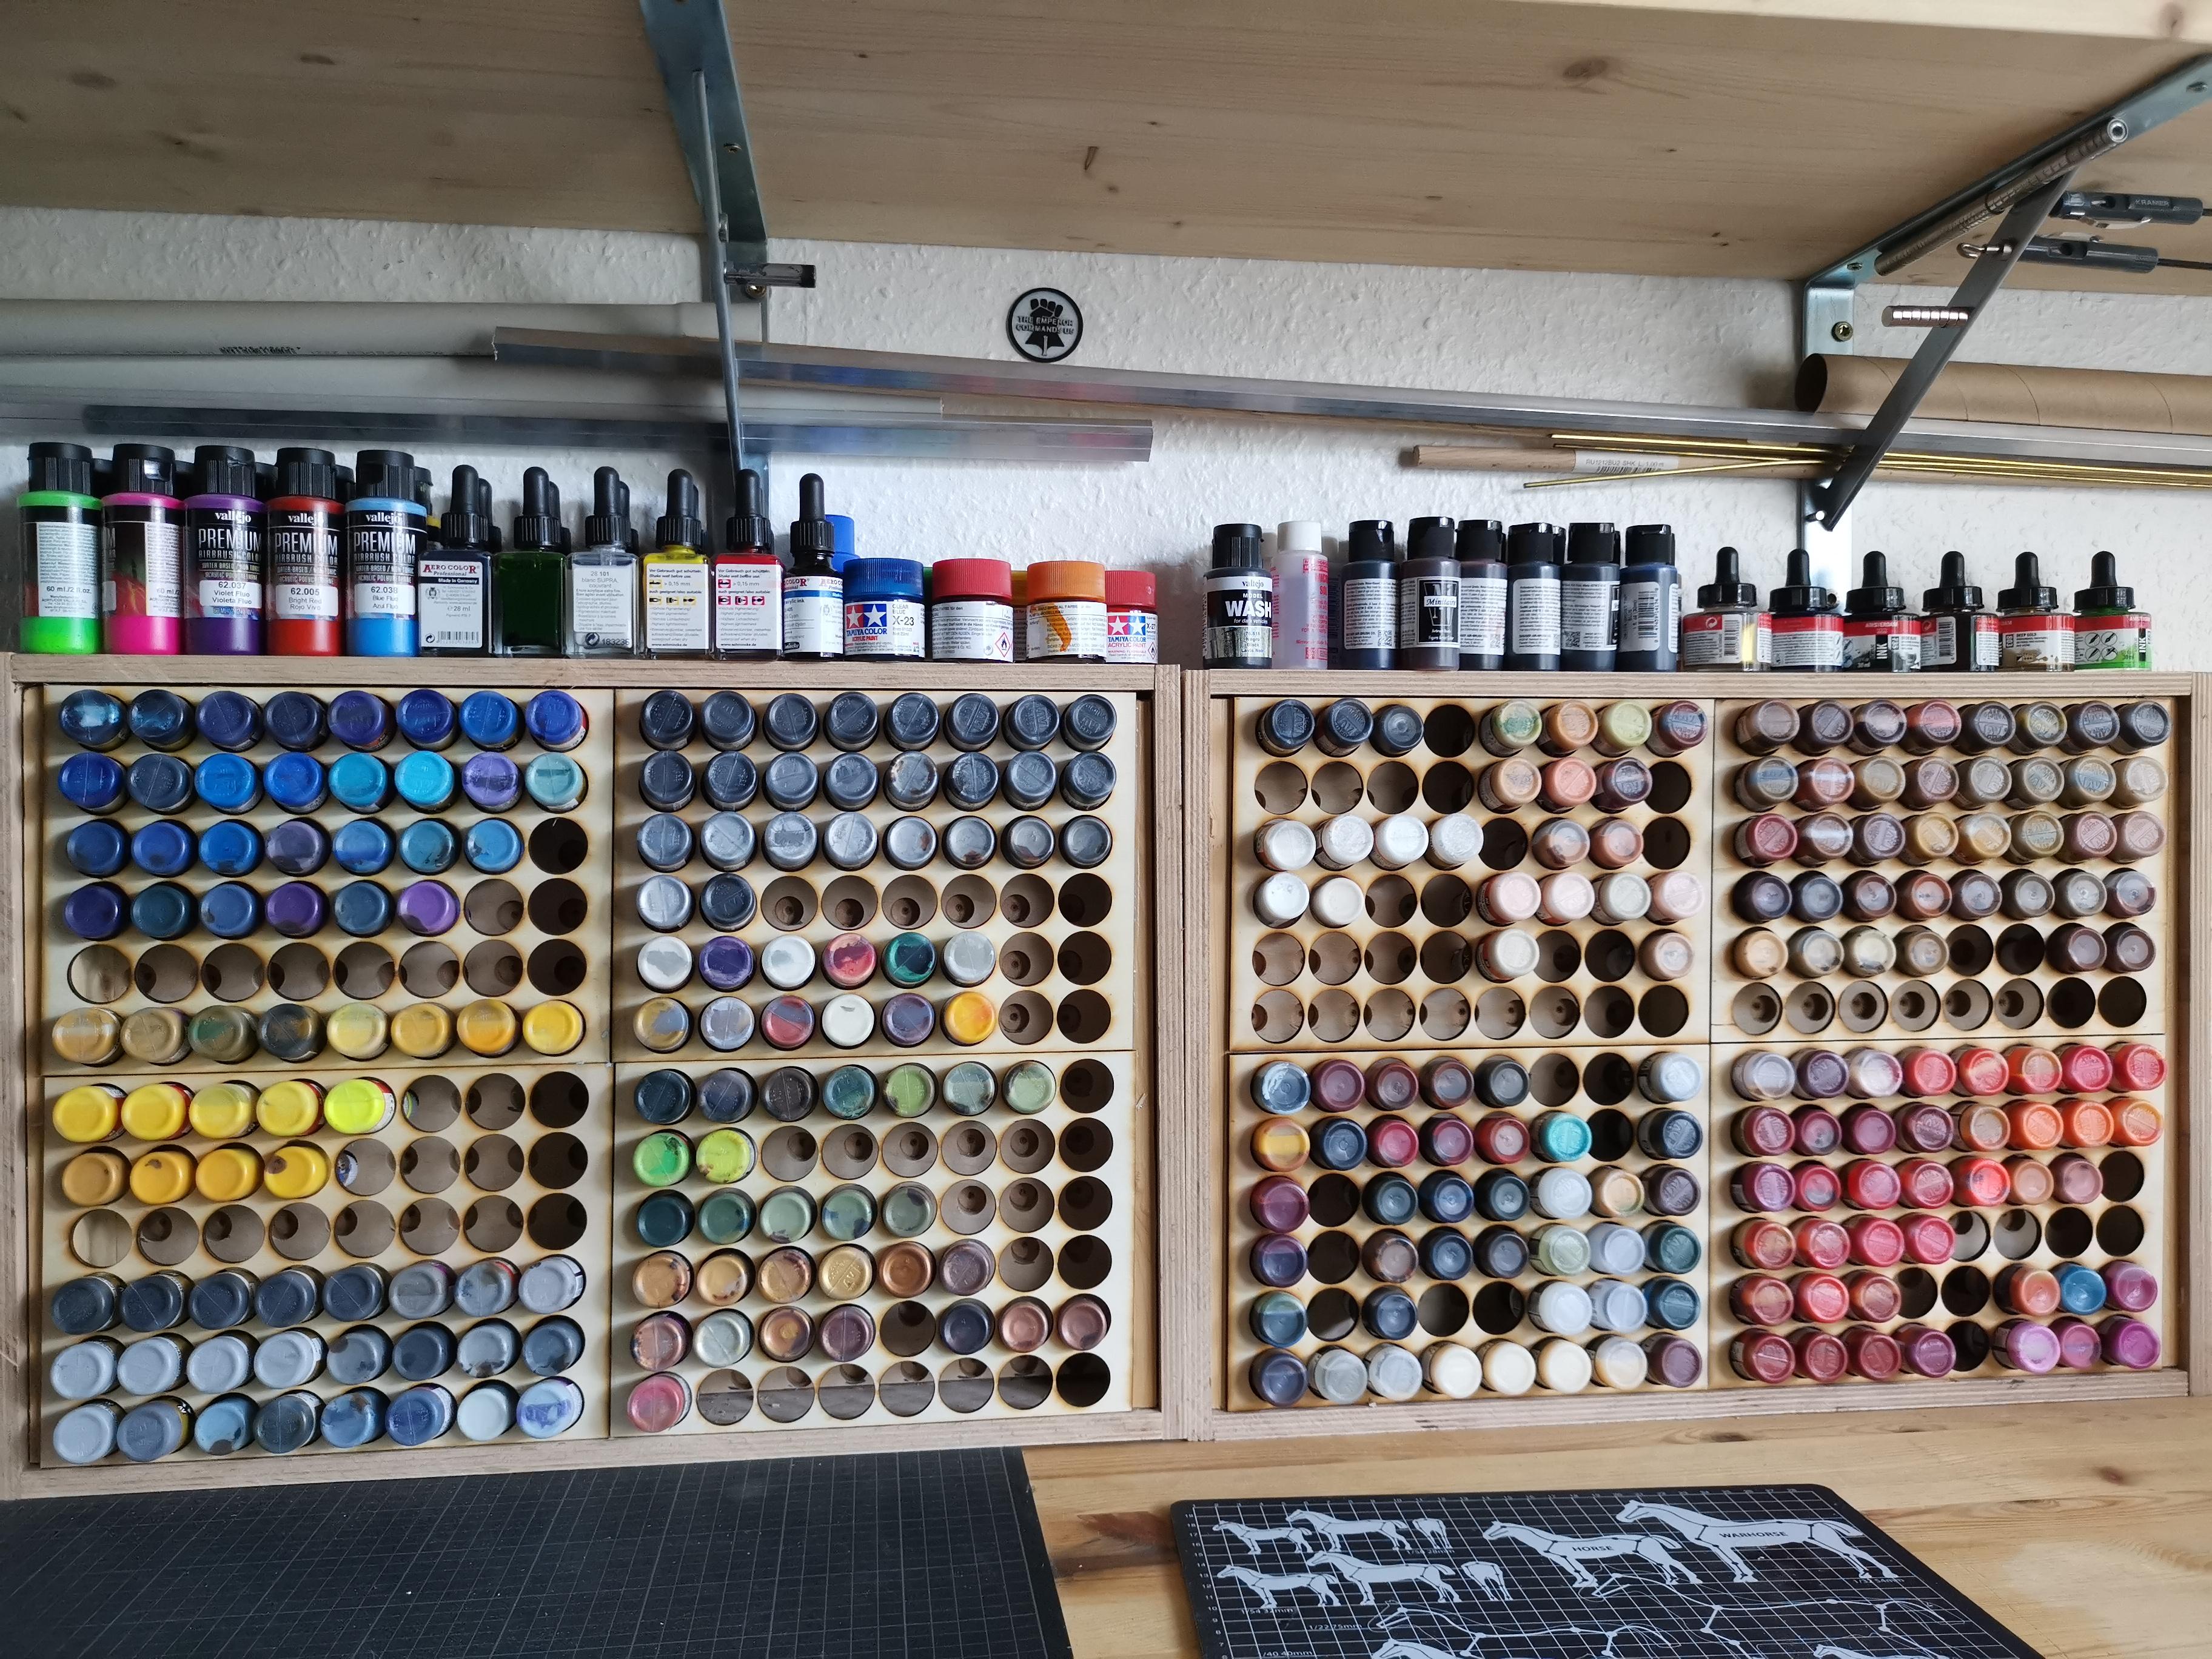 Paint Storage, My paintshelf - My paintshelf - Gallery - DakkaDakka